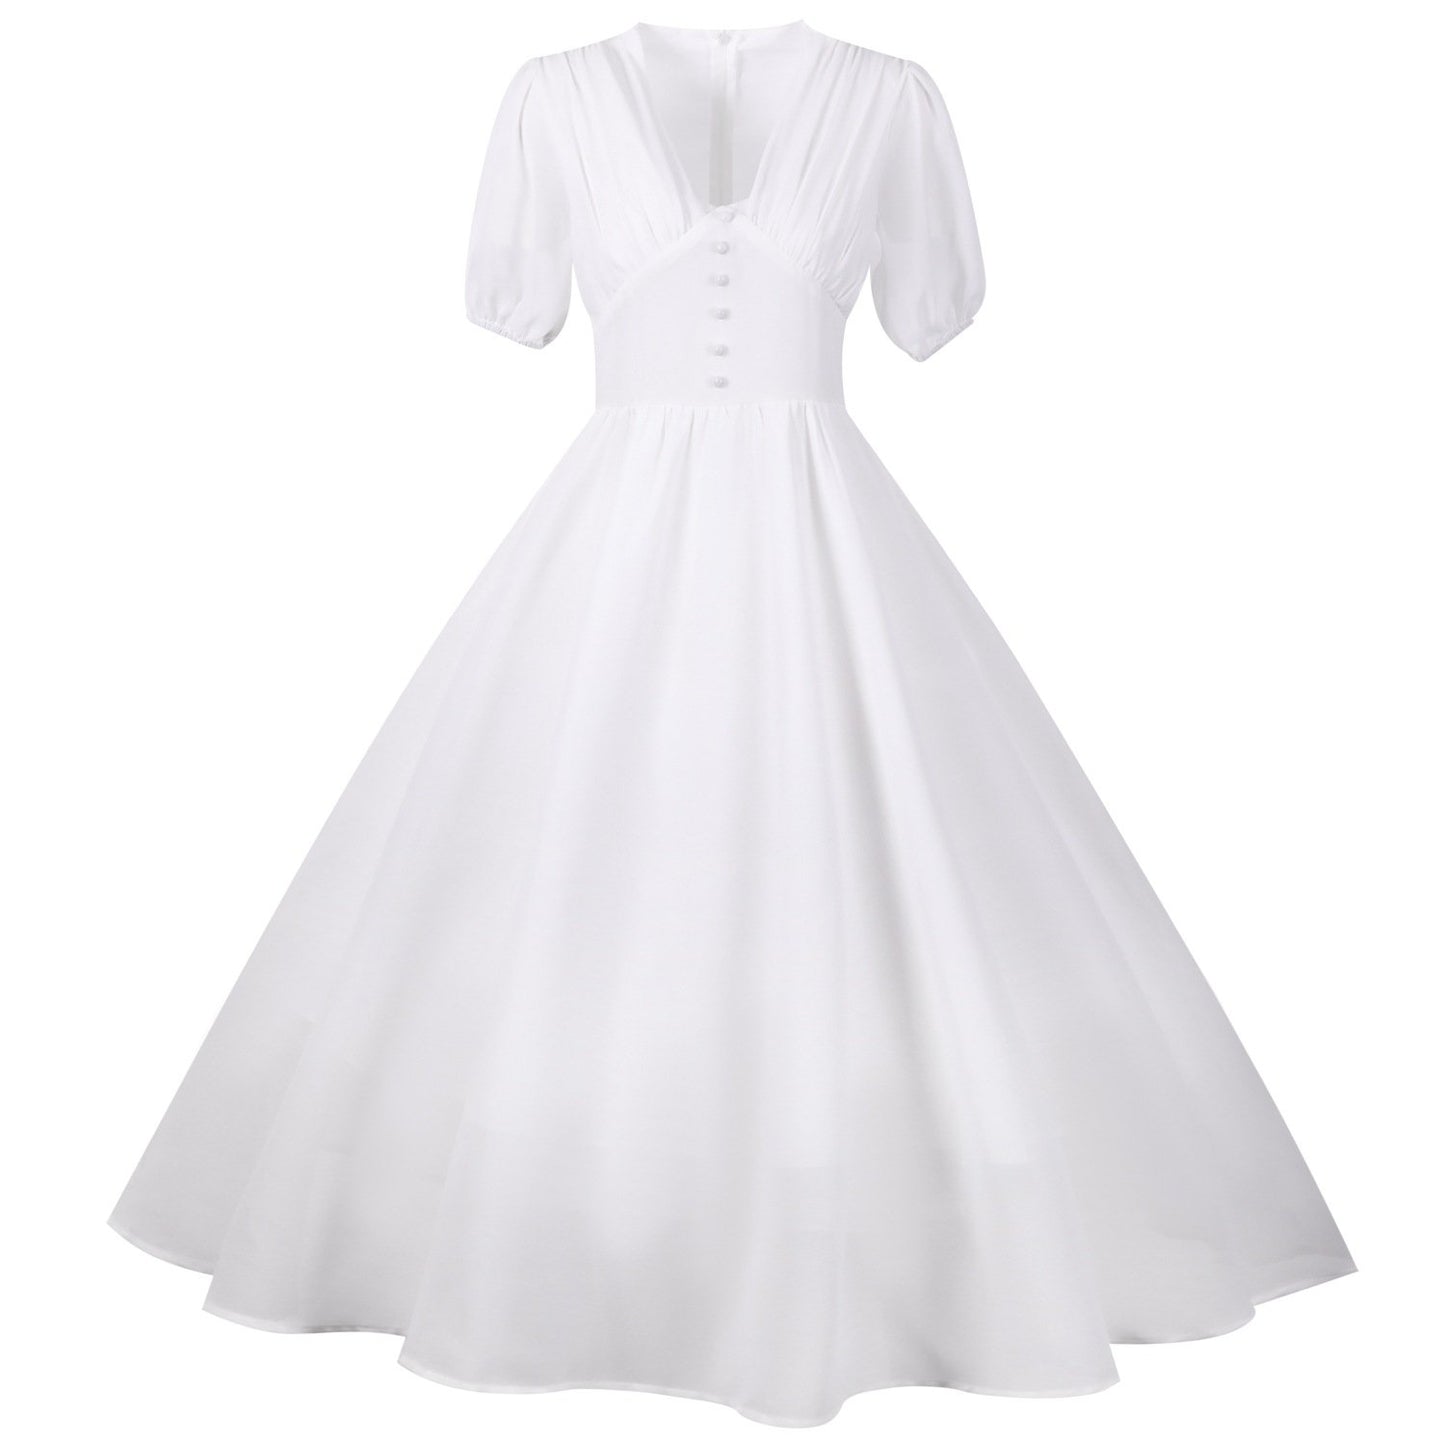 Chiffon Vintage Short Sleeves Dresses-Maxi Dresses-White-S-Free Shipping at meselling99